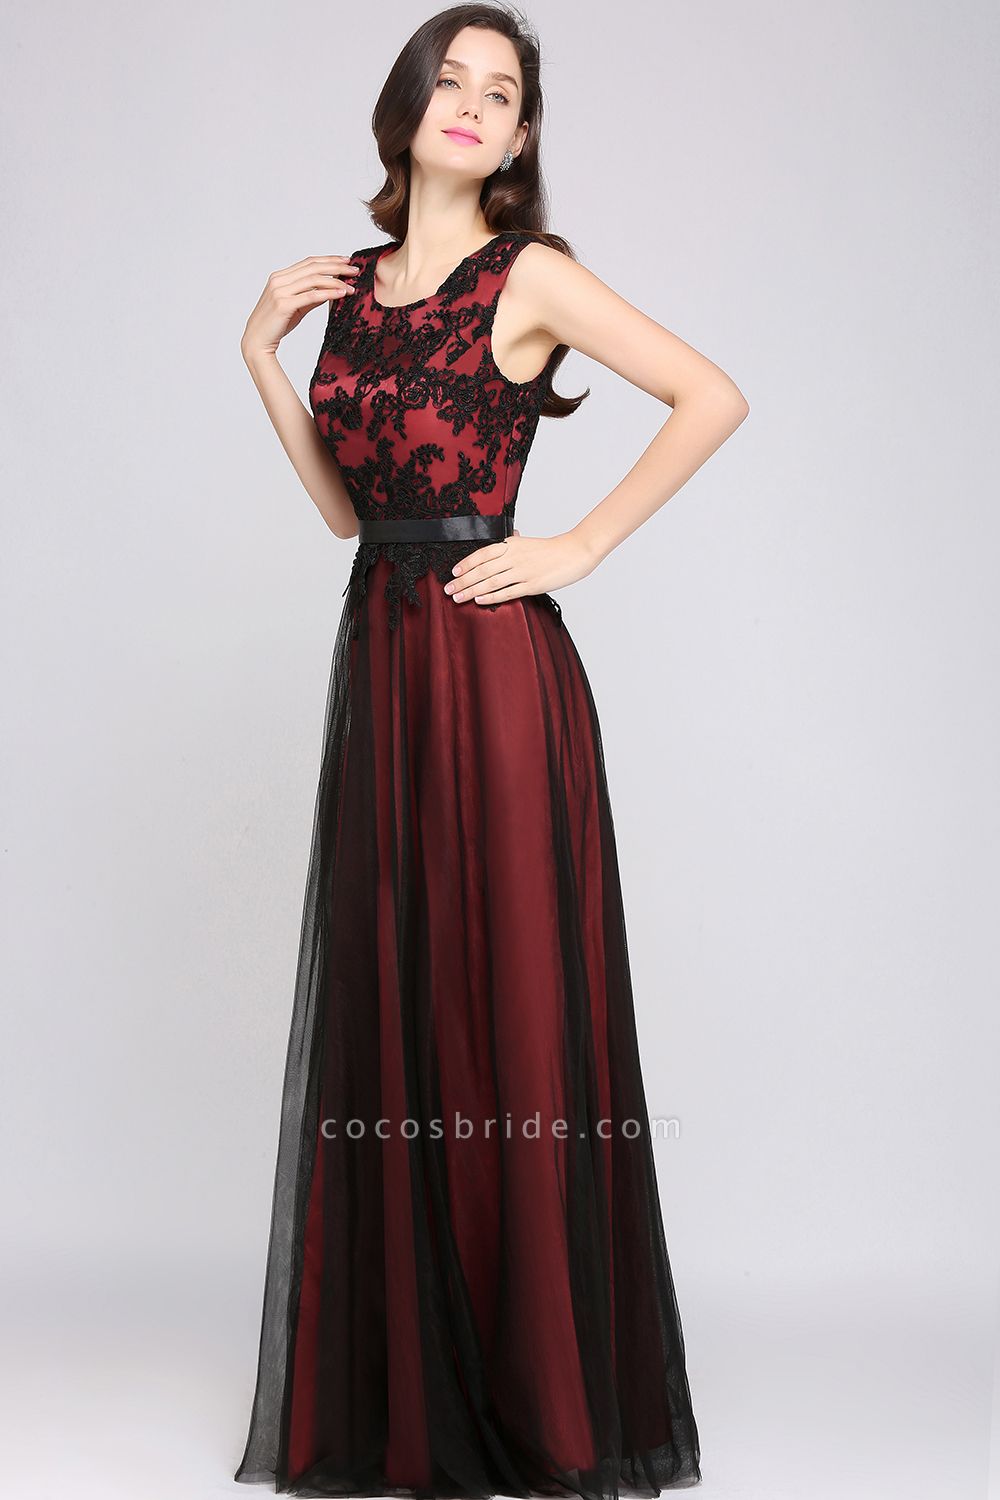 Elegant A-Line Tulle Lace Sleeveless Floor-Length Bridesmaid Dress with Sash